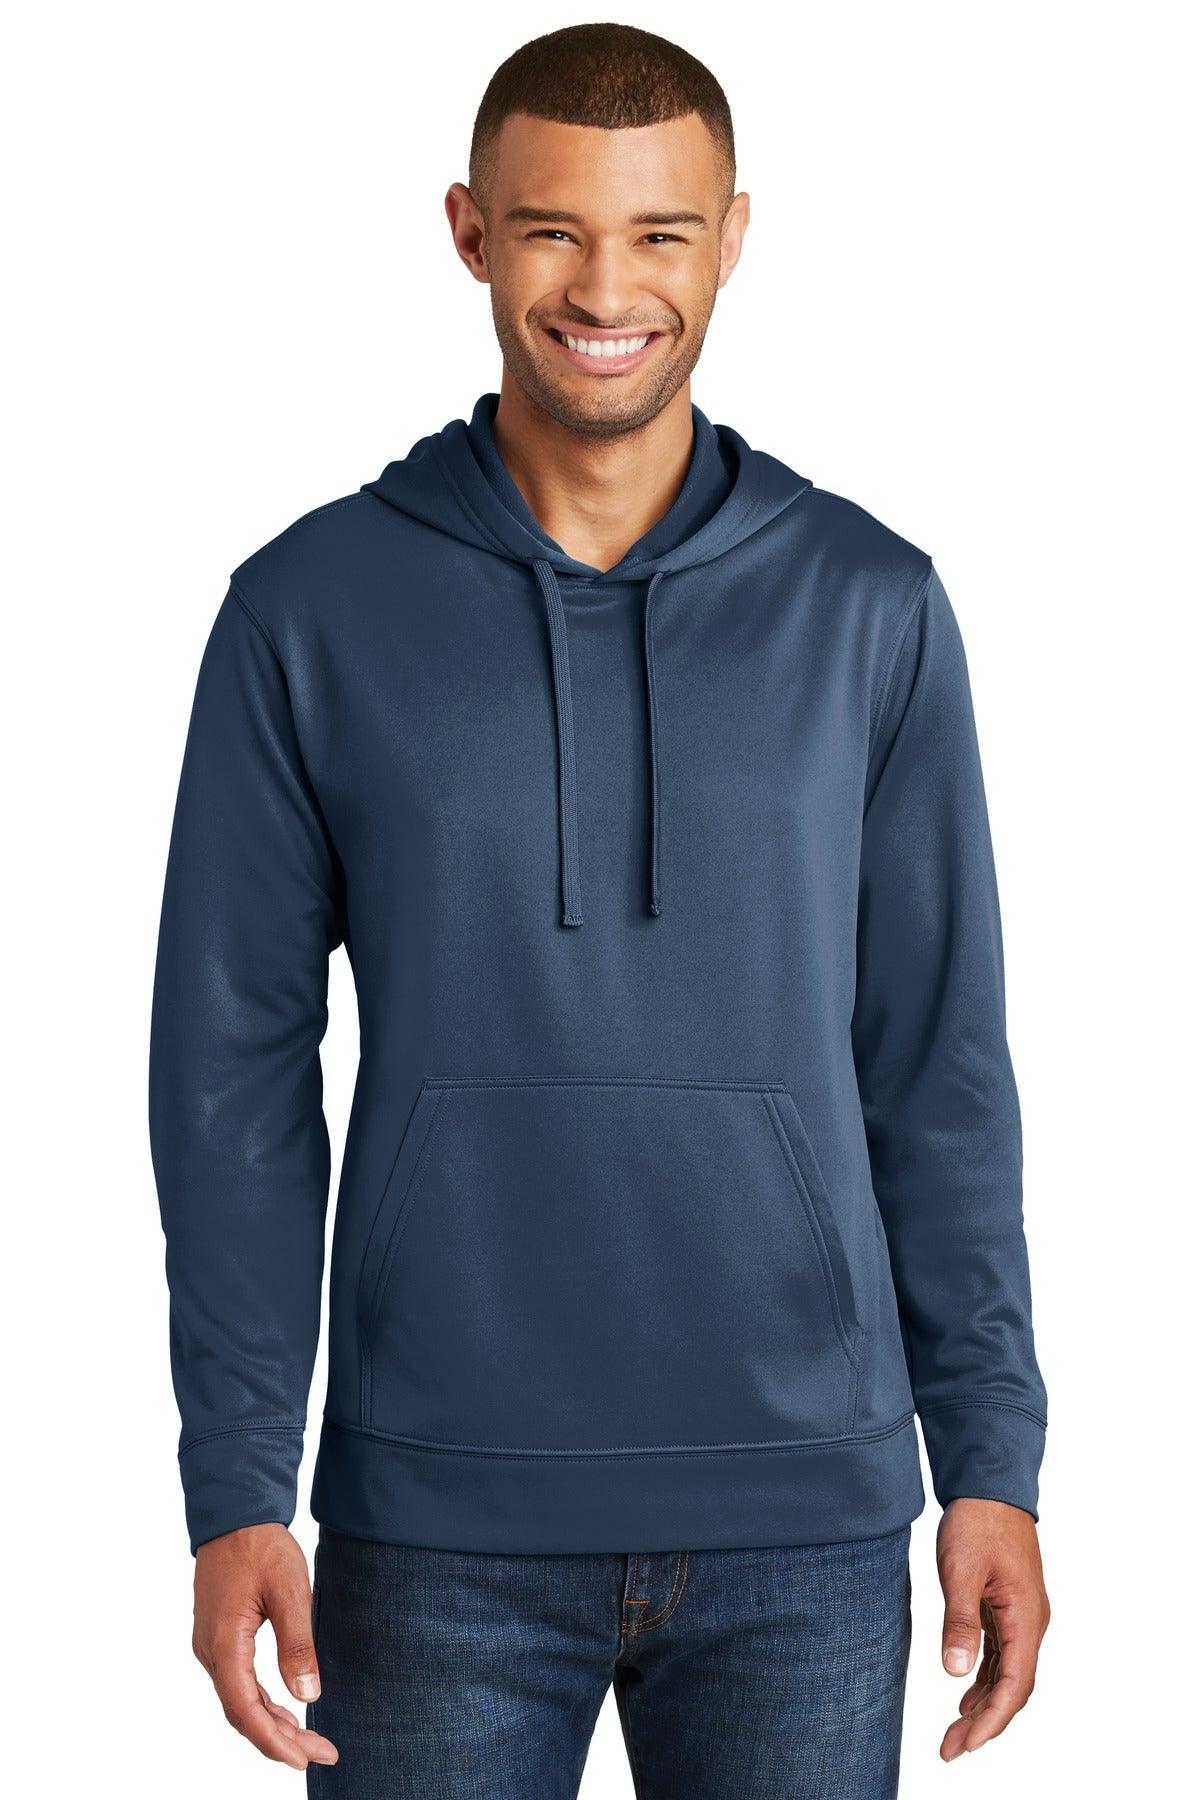 Port & Company Performance Fleece Pullover Hooded Sweatshirt. PC590H - Dresses Max